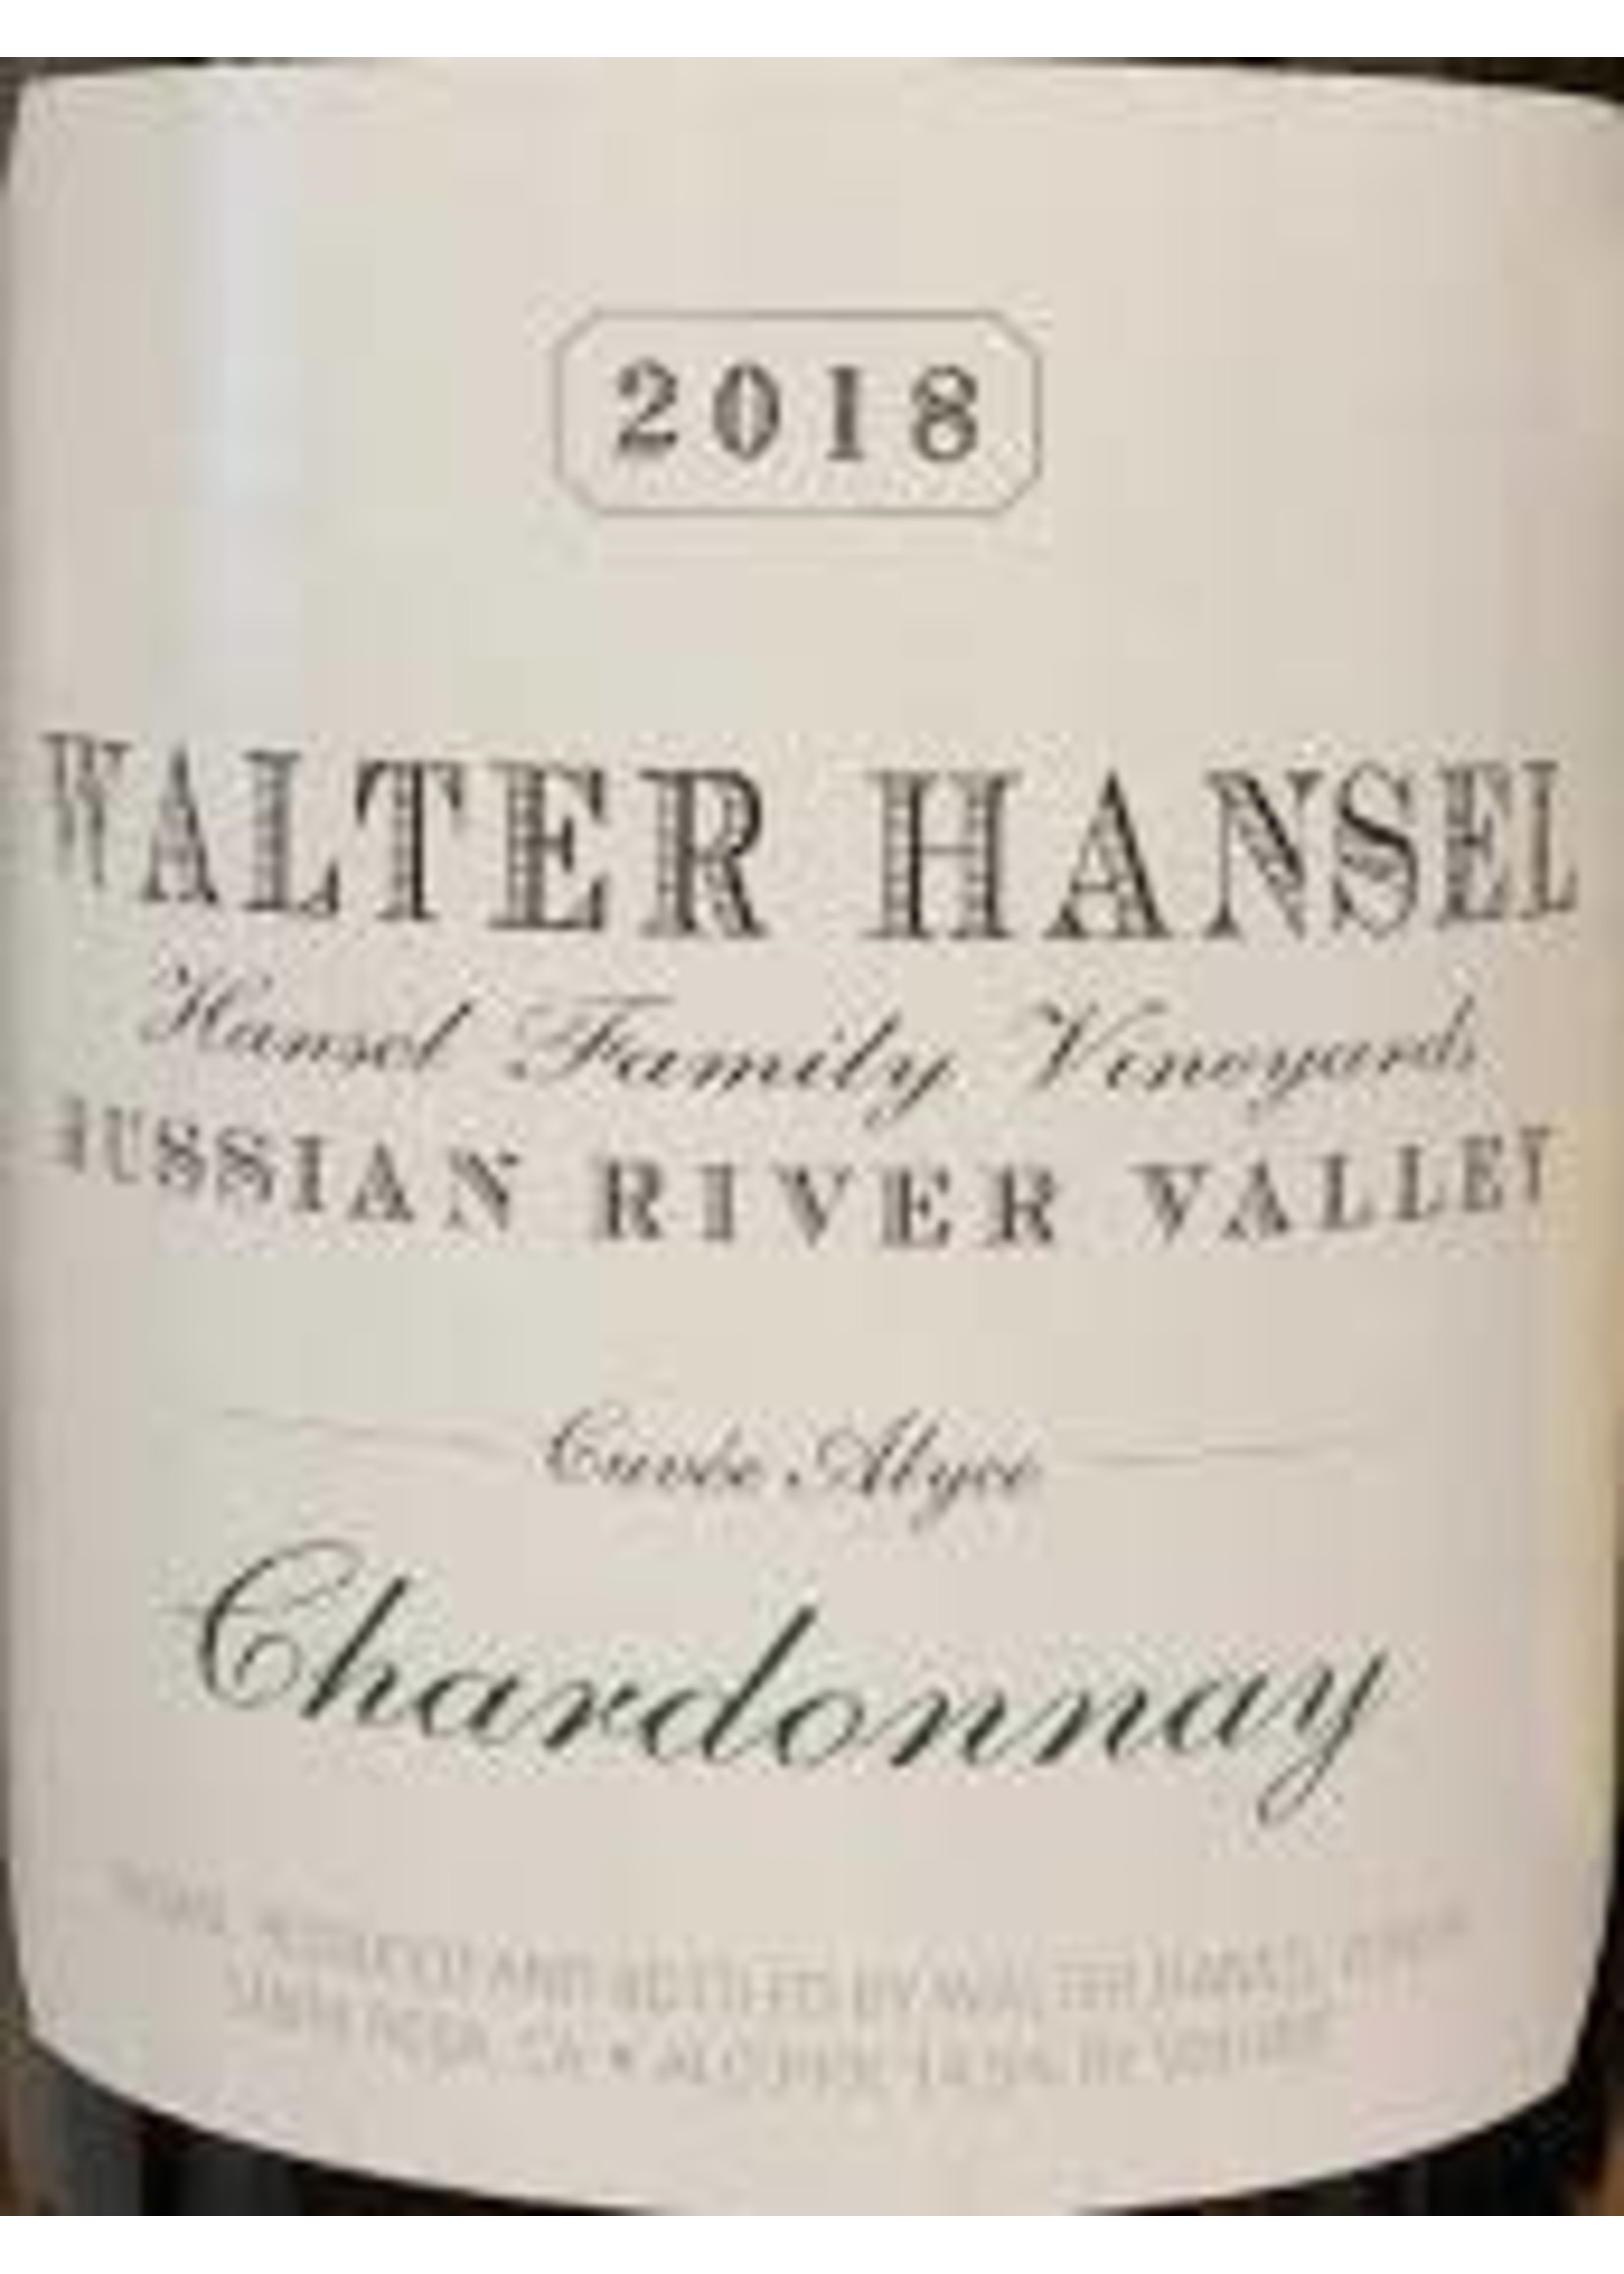 Walter Hansel 2018 Chardonnay Cuvee Alyce 750ml